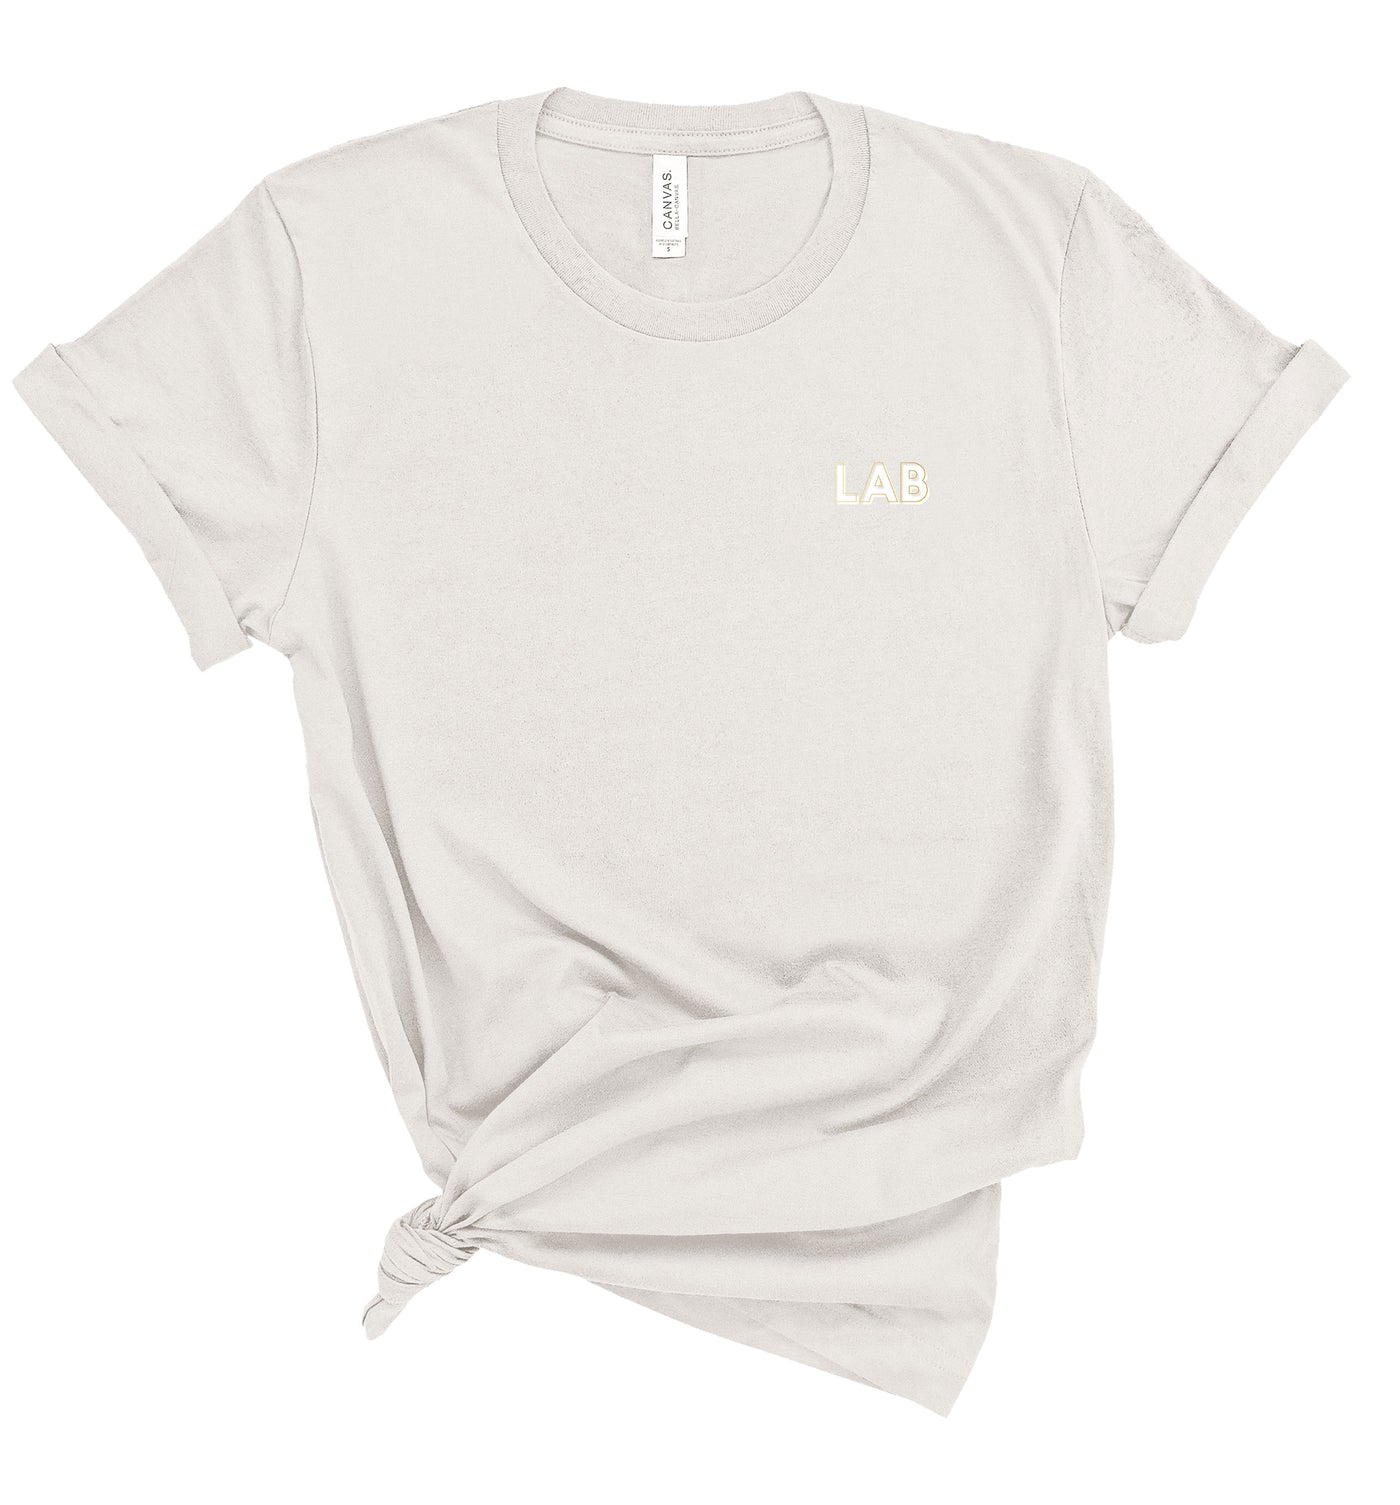 Lab Creds - Shirt